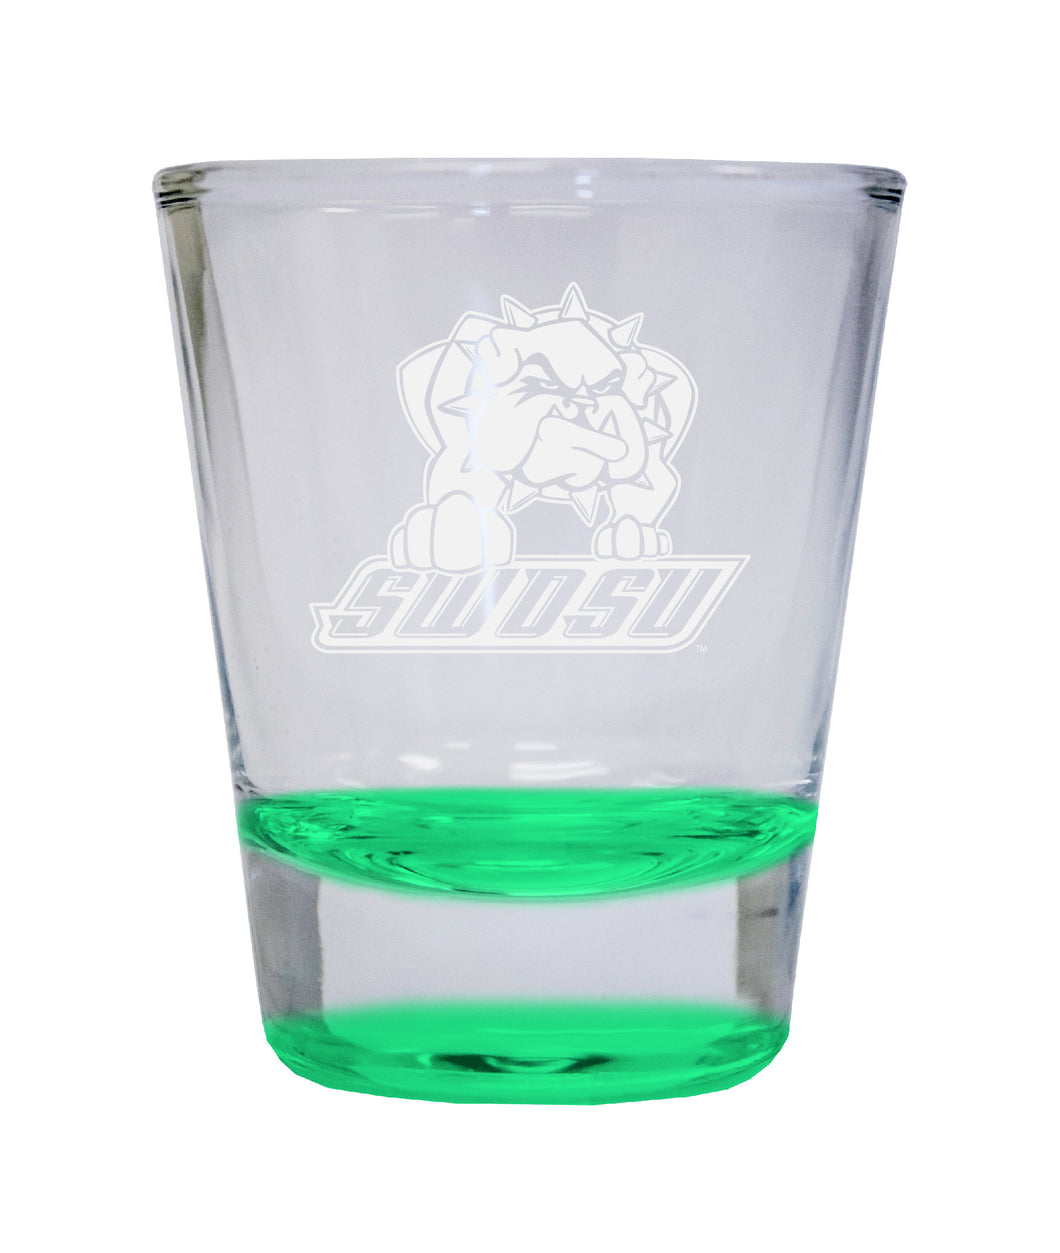 Southwestern Oklahoma State University Etched Round Shot Glass 2 oz Green